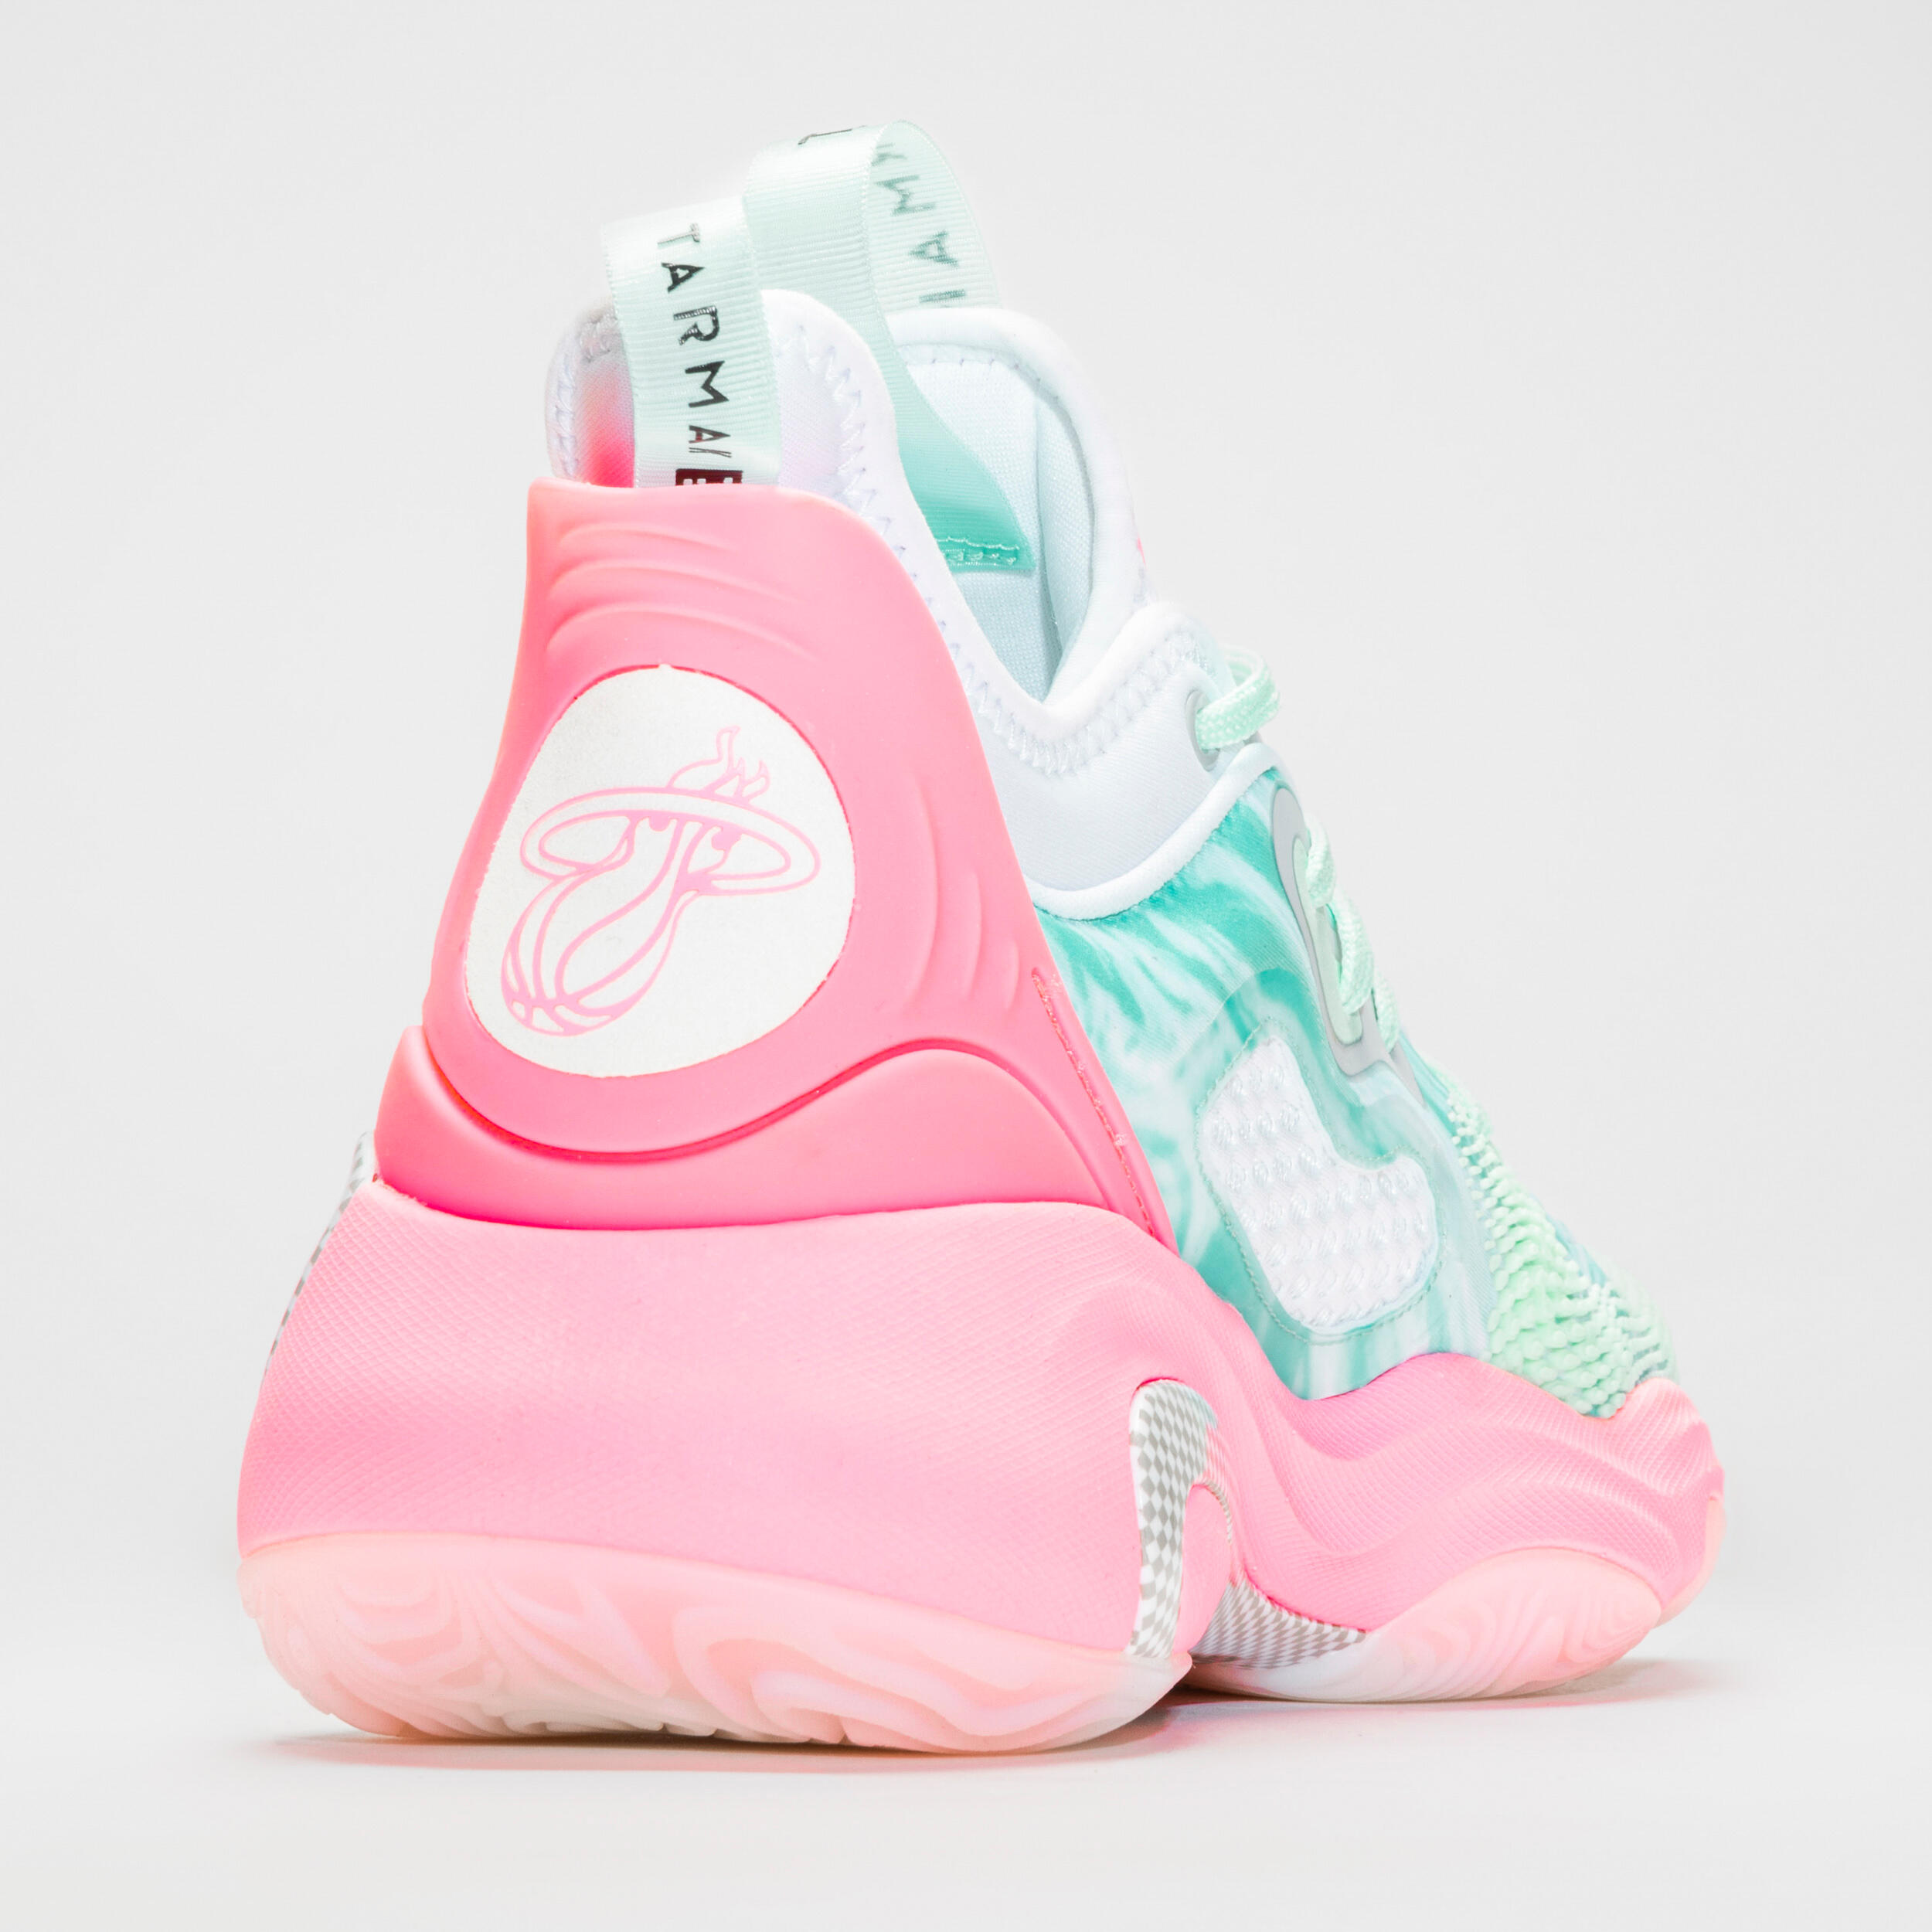 Men's/Women's Basketball Shoes SE900 - NBA Miami Heat/Green/Pink 5/9